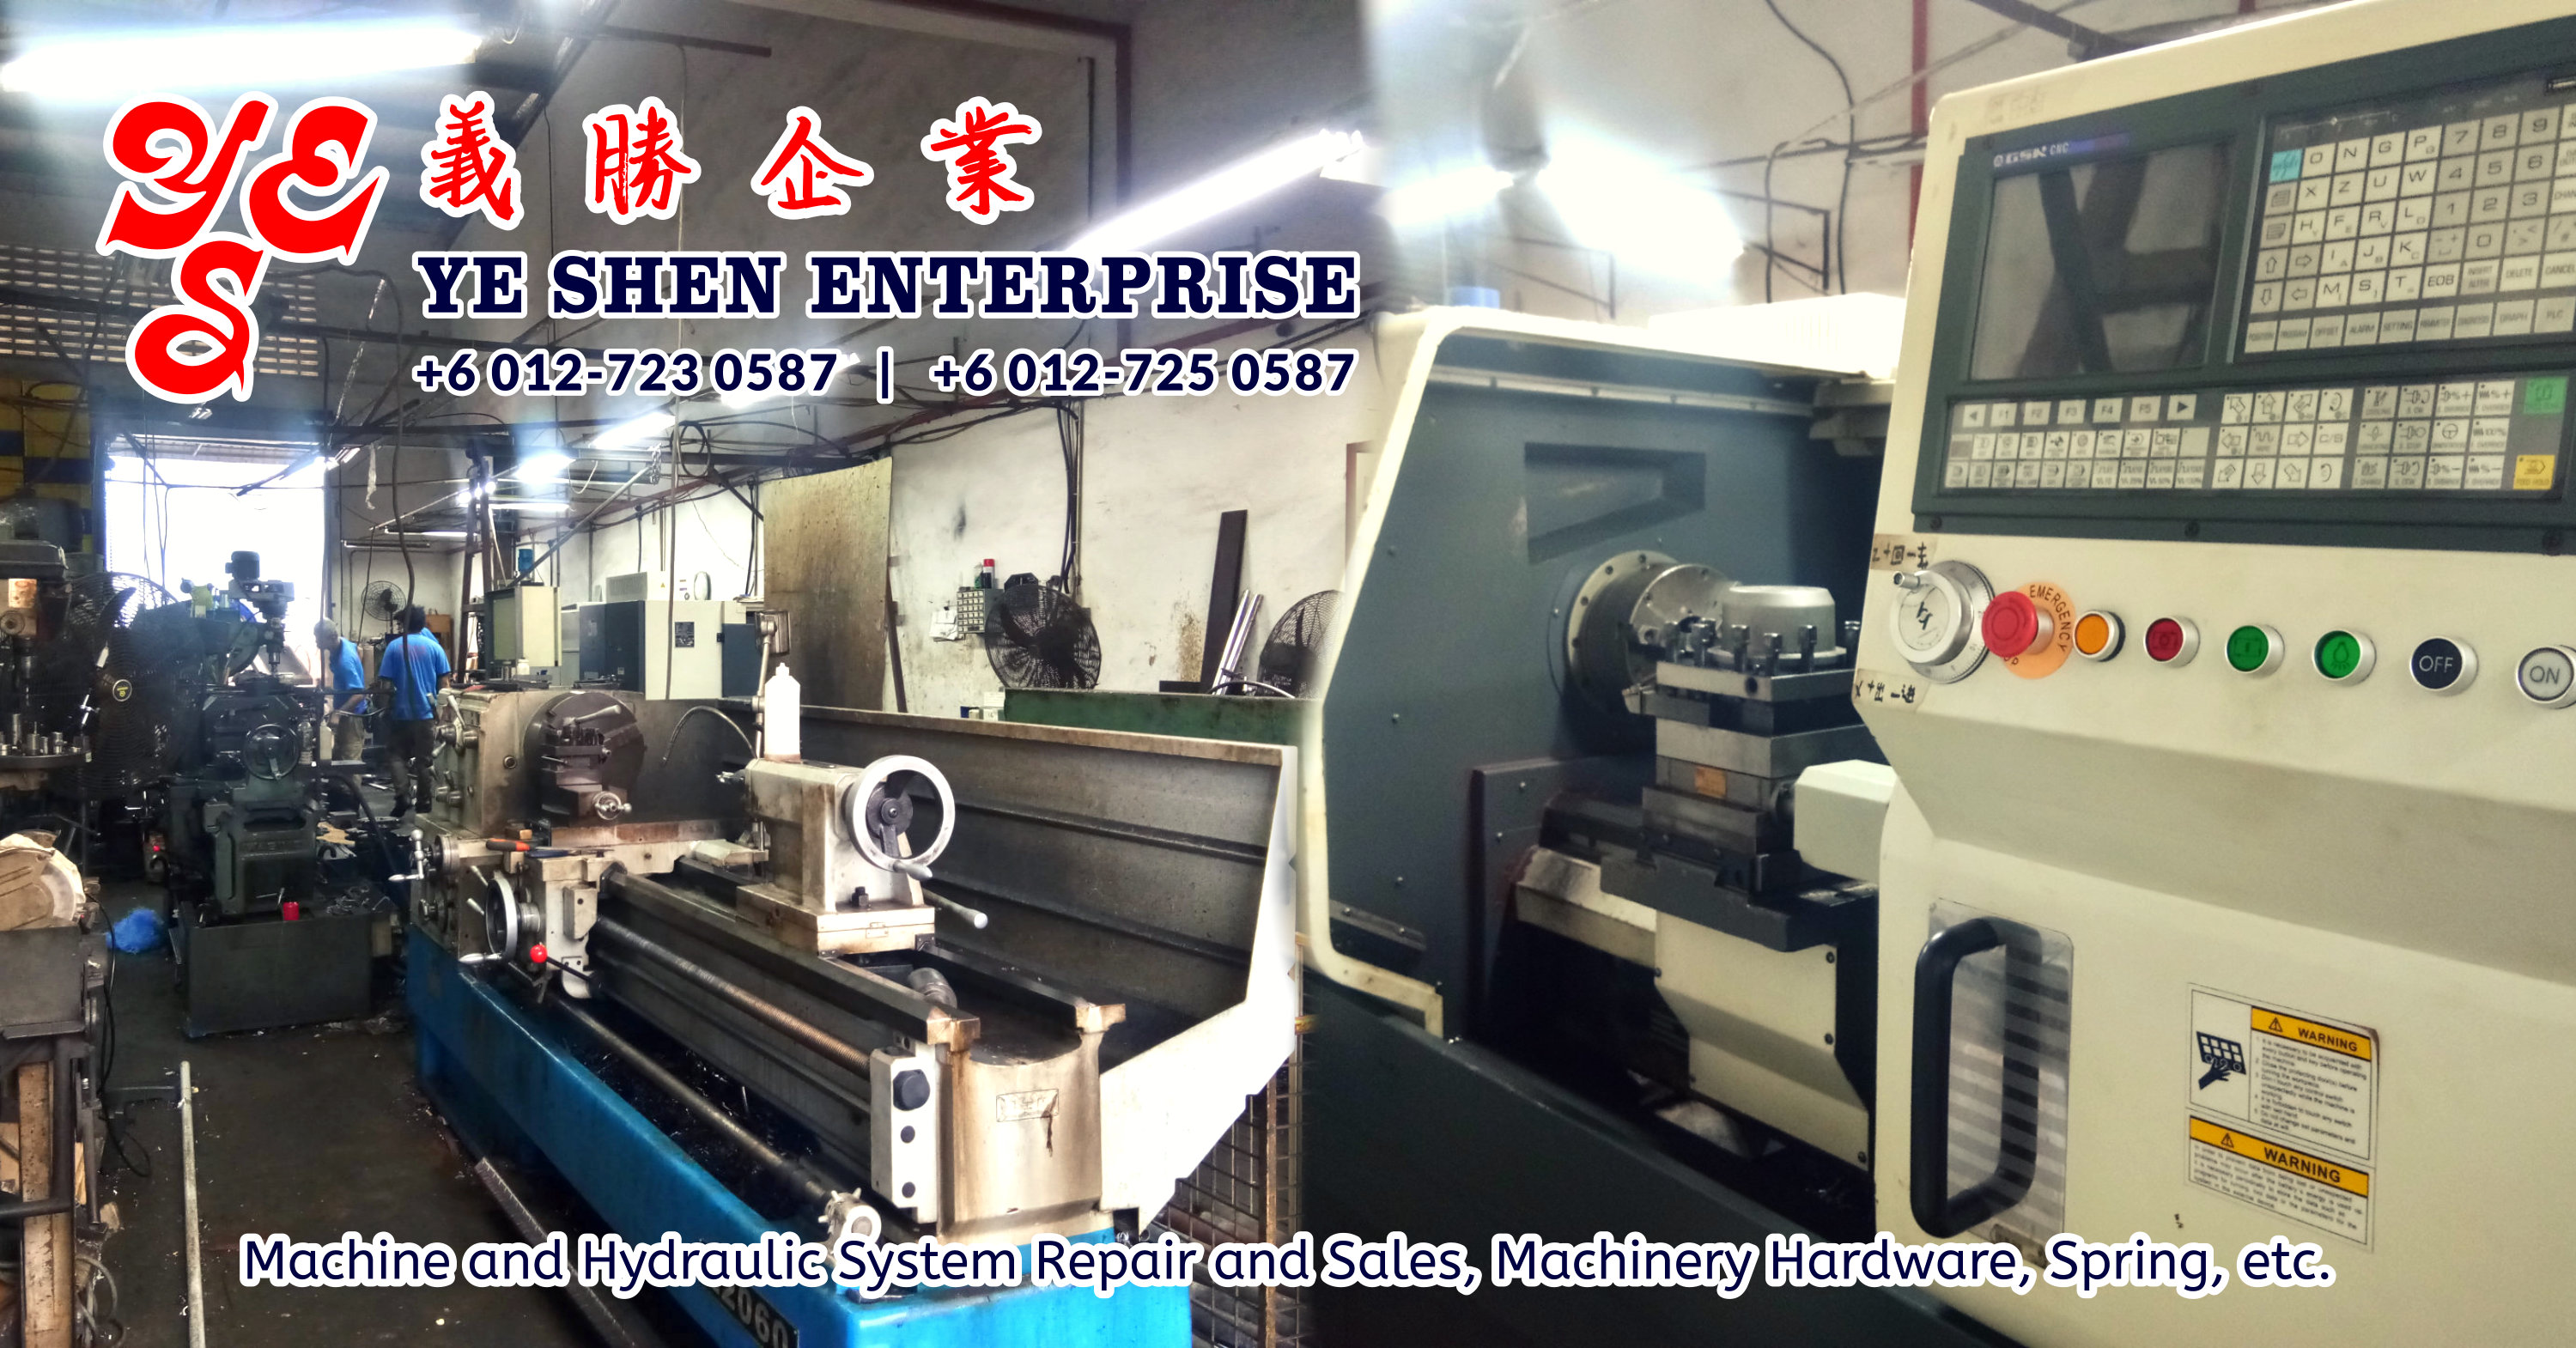 Ye Shen Enterprise 義勝企業